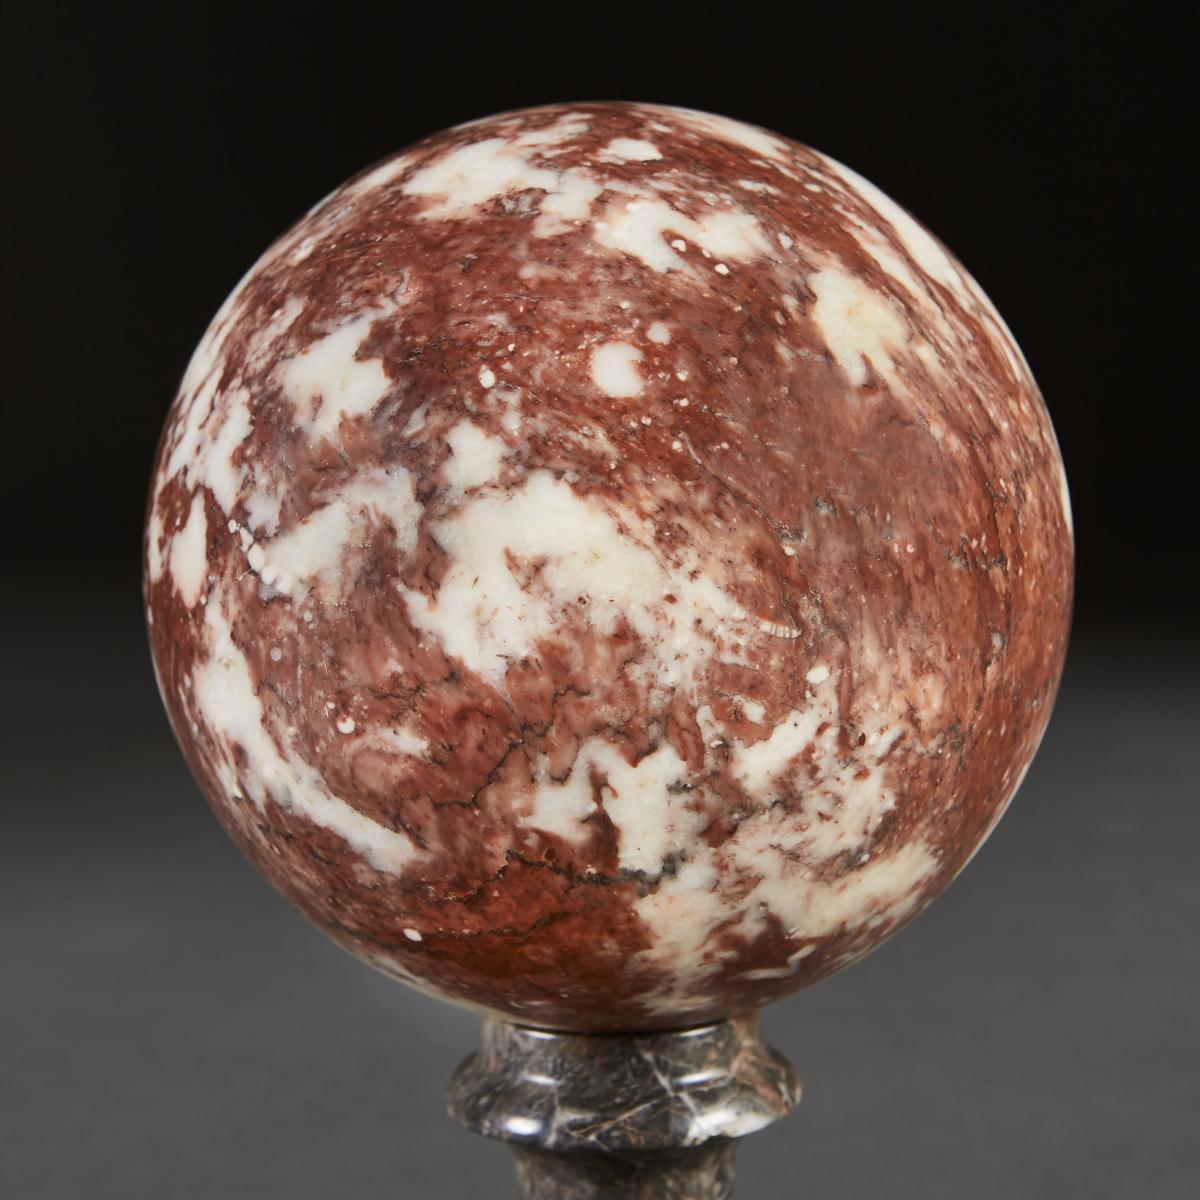 19th Century Italian Marble Spheres